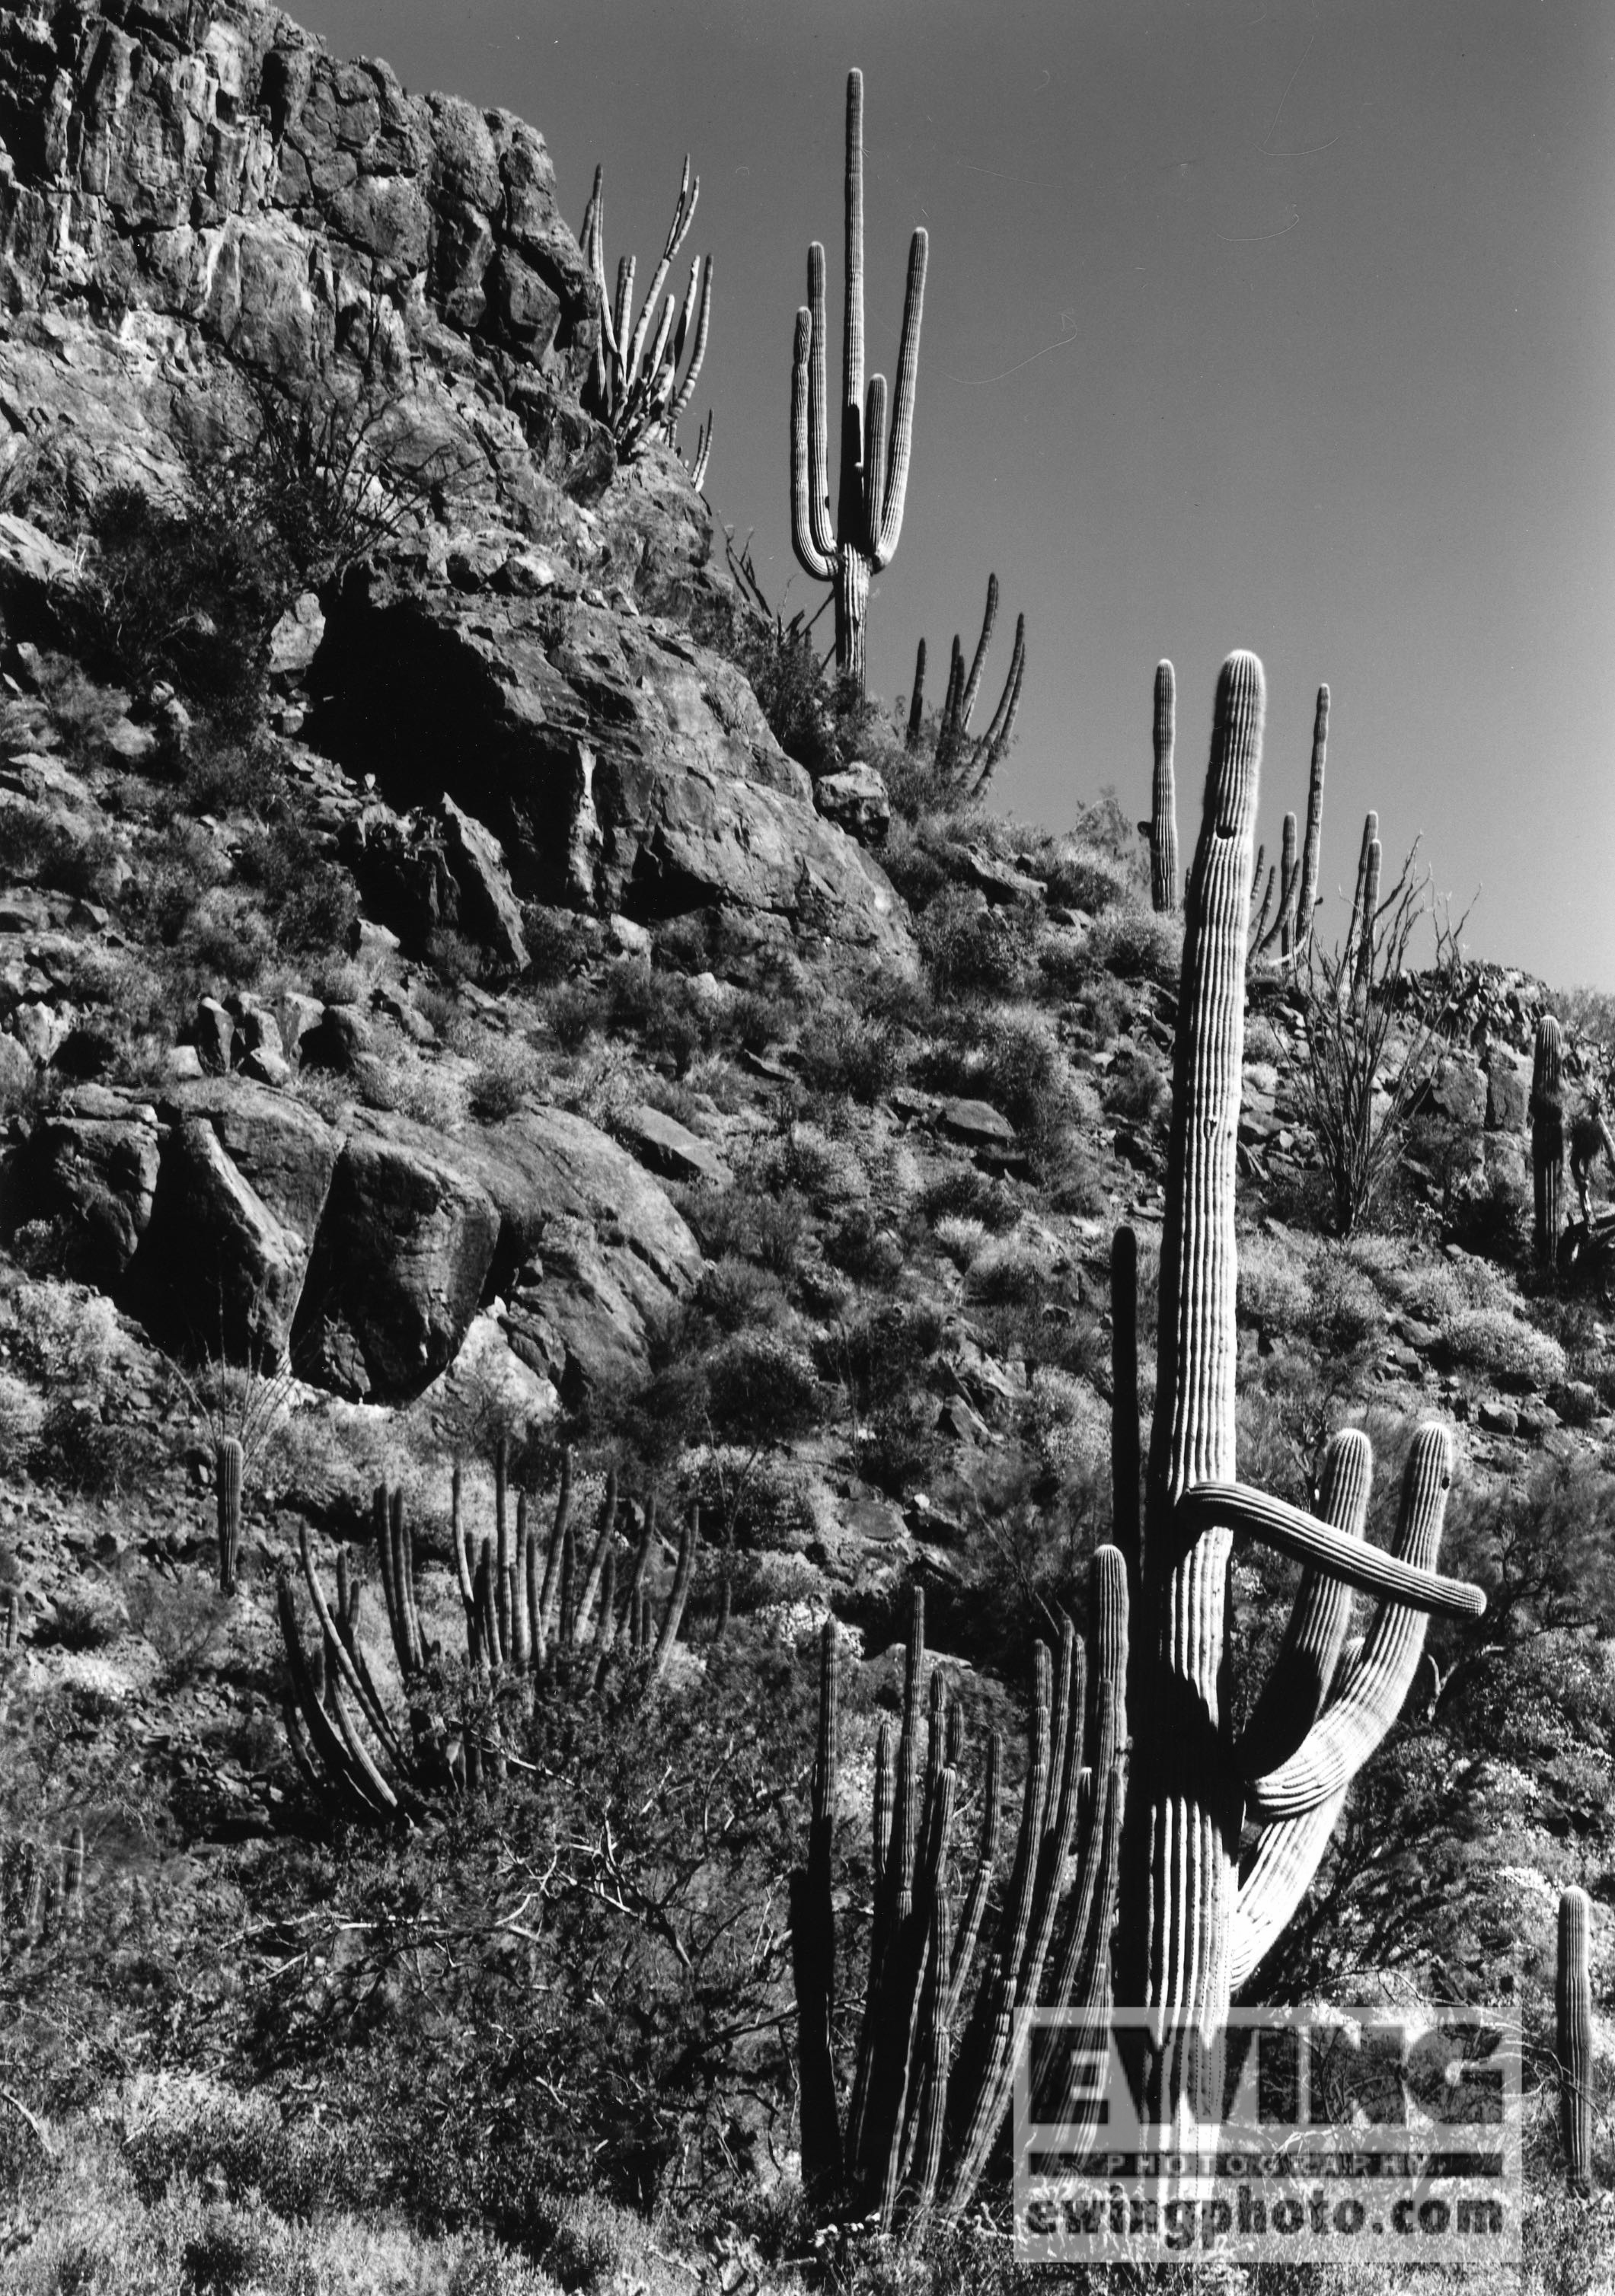 Organ Pipe Cactus National Monument, Arizona 